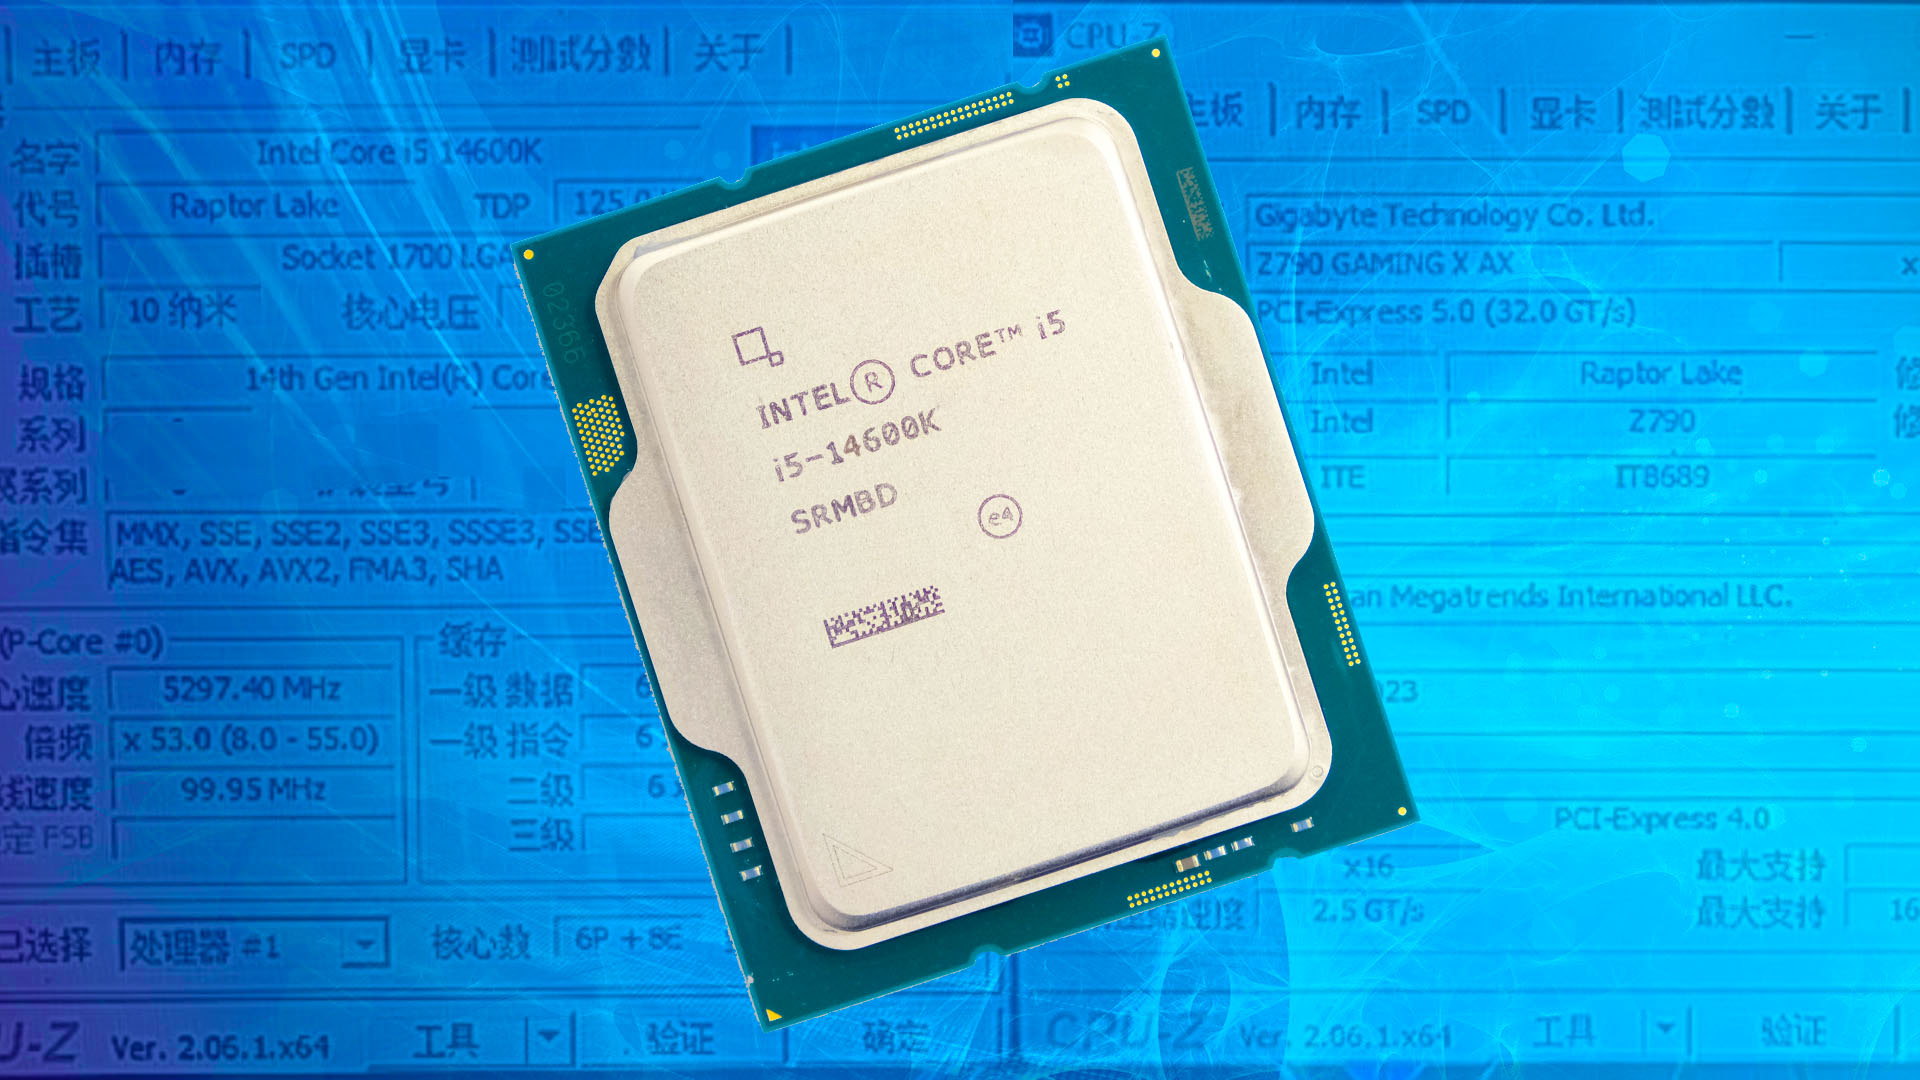 PC avec Intel Core i5-14600KF, 32Go